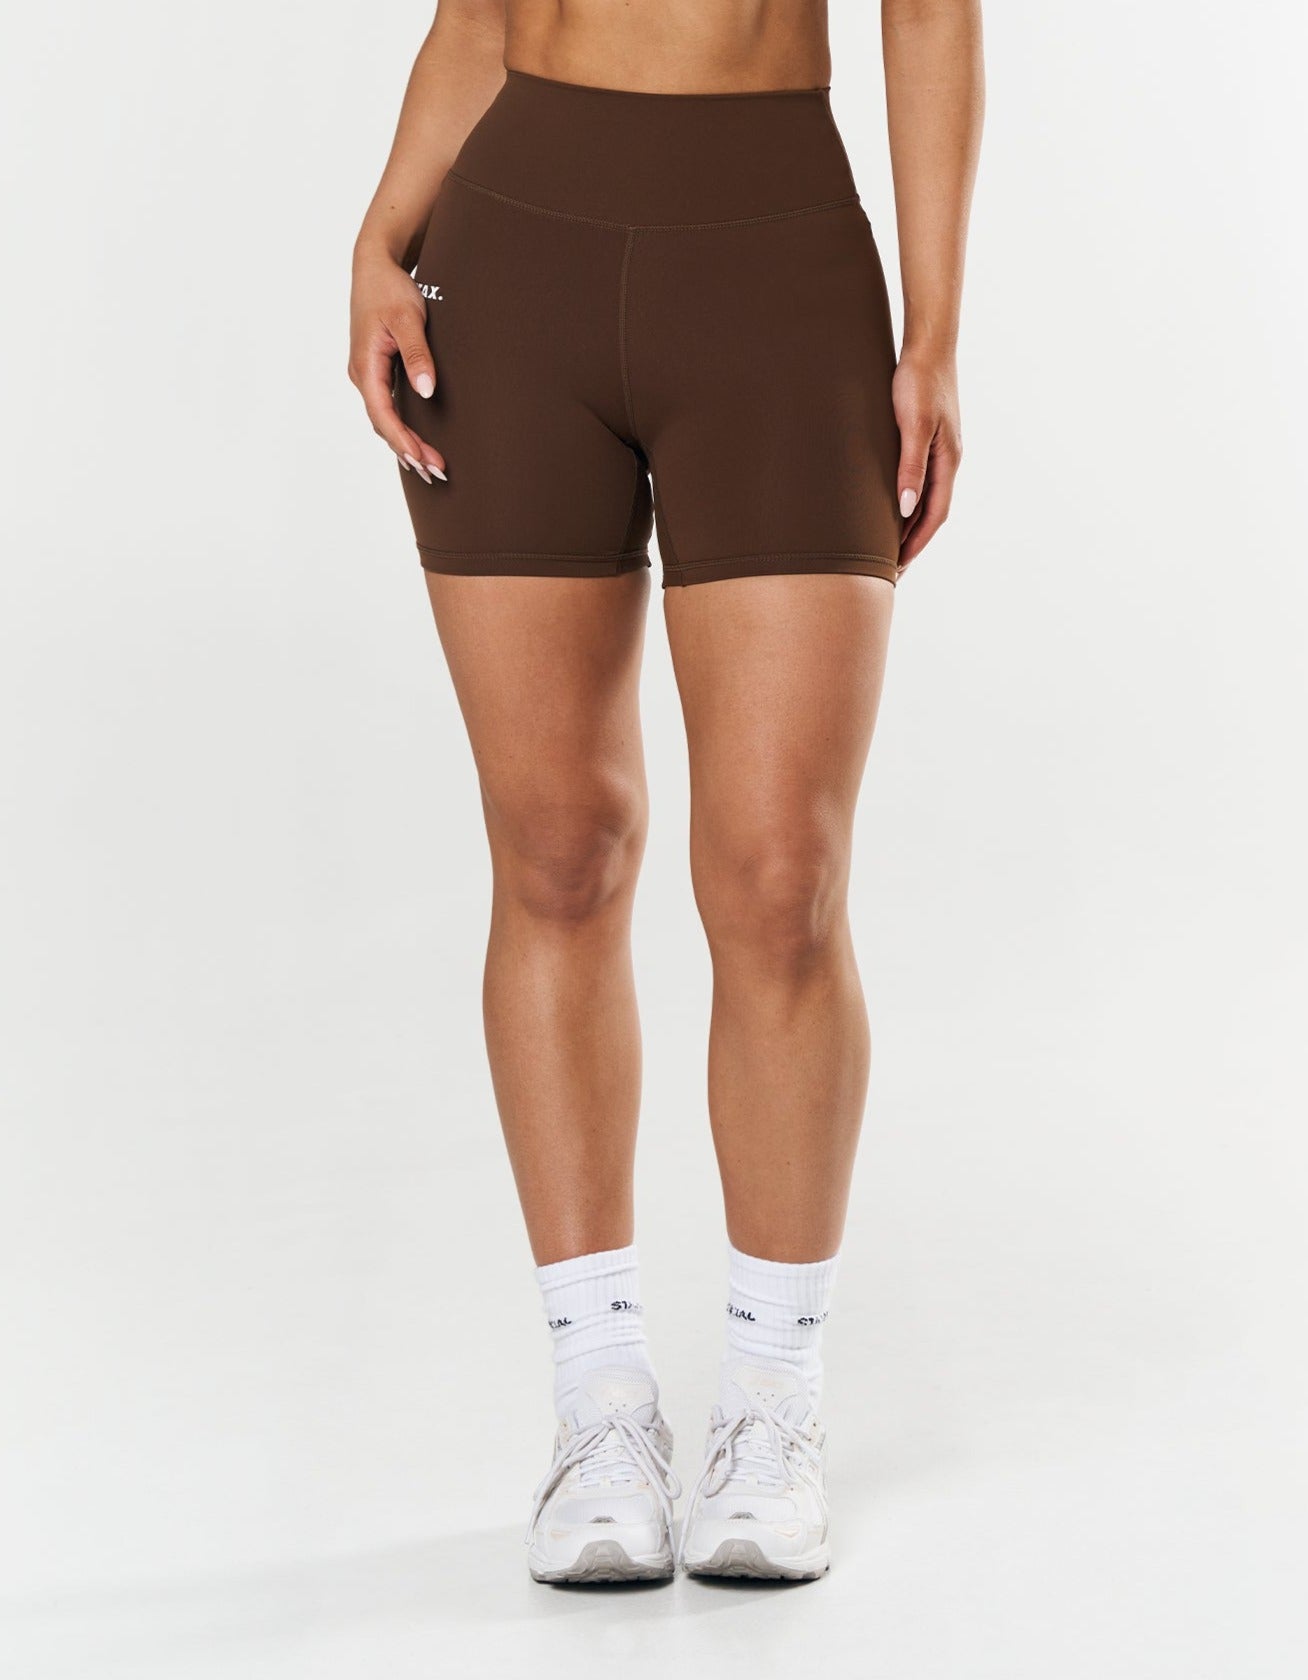 stax-midi-bike-shorts-nandex-raw-umber-brown